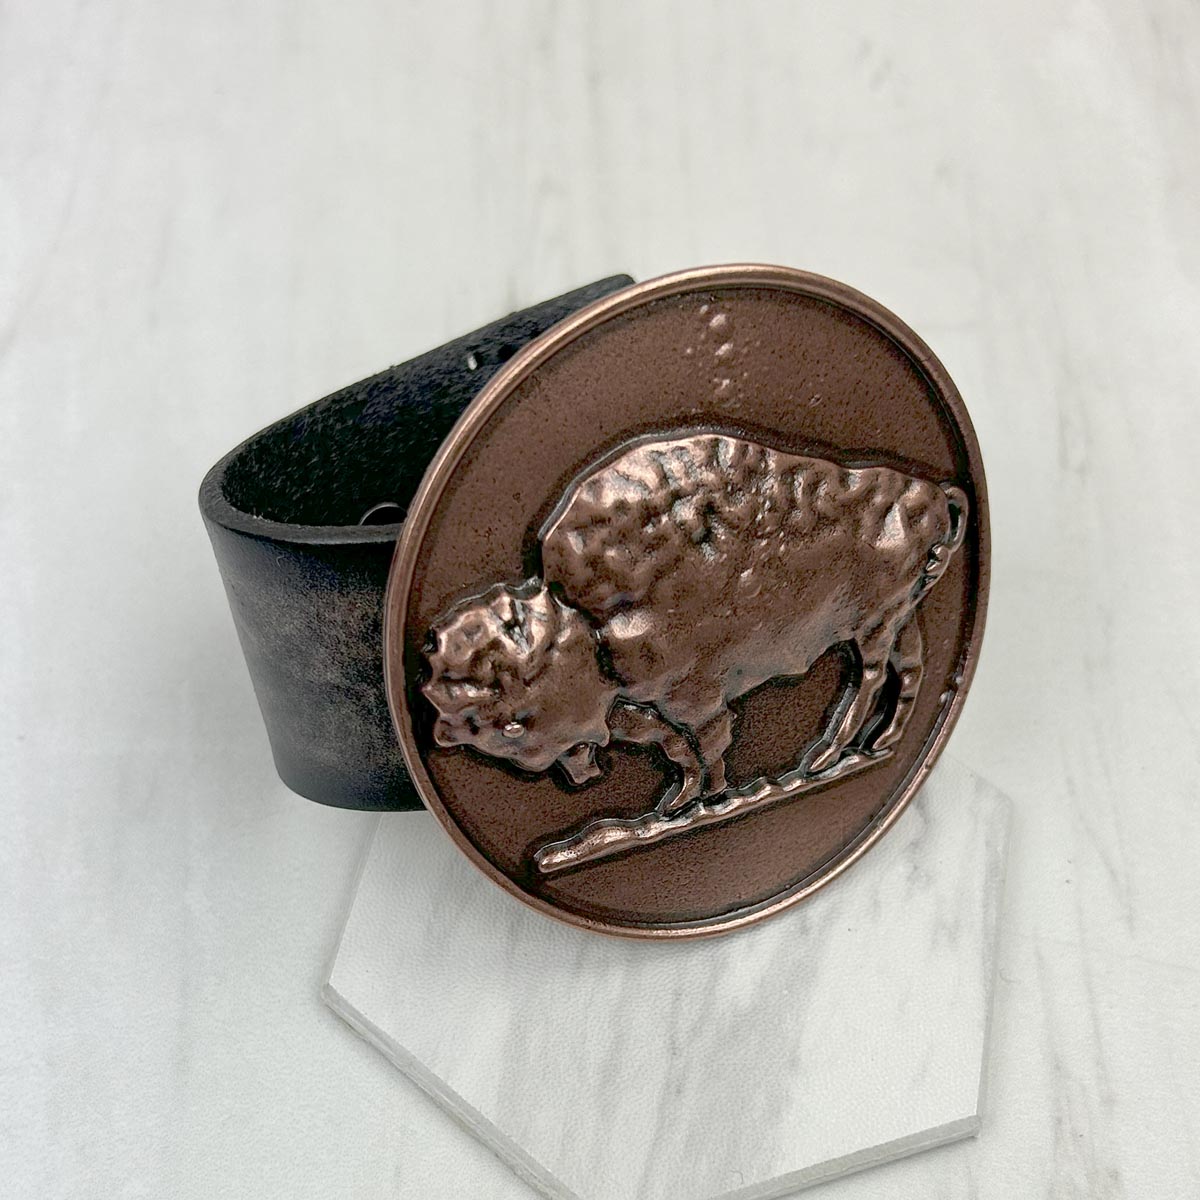 NKZ231226-03          Black leather with silver metal buffalo bracelet